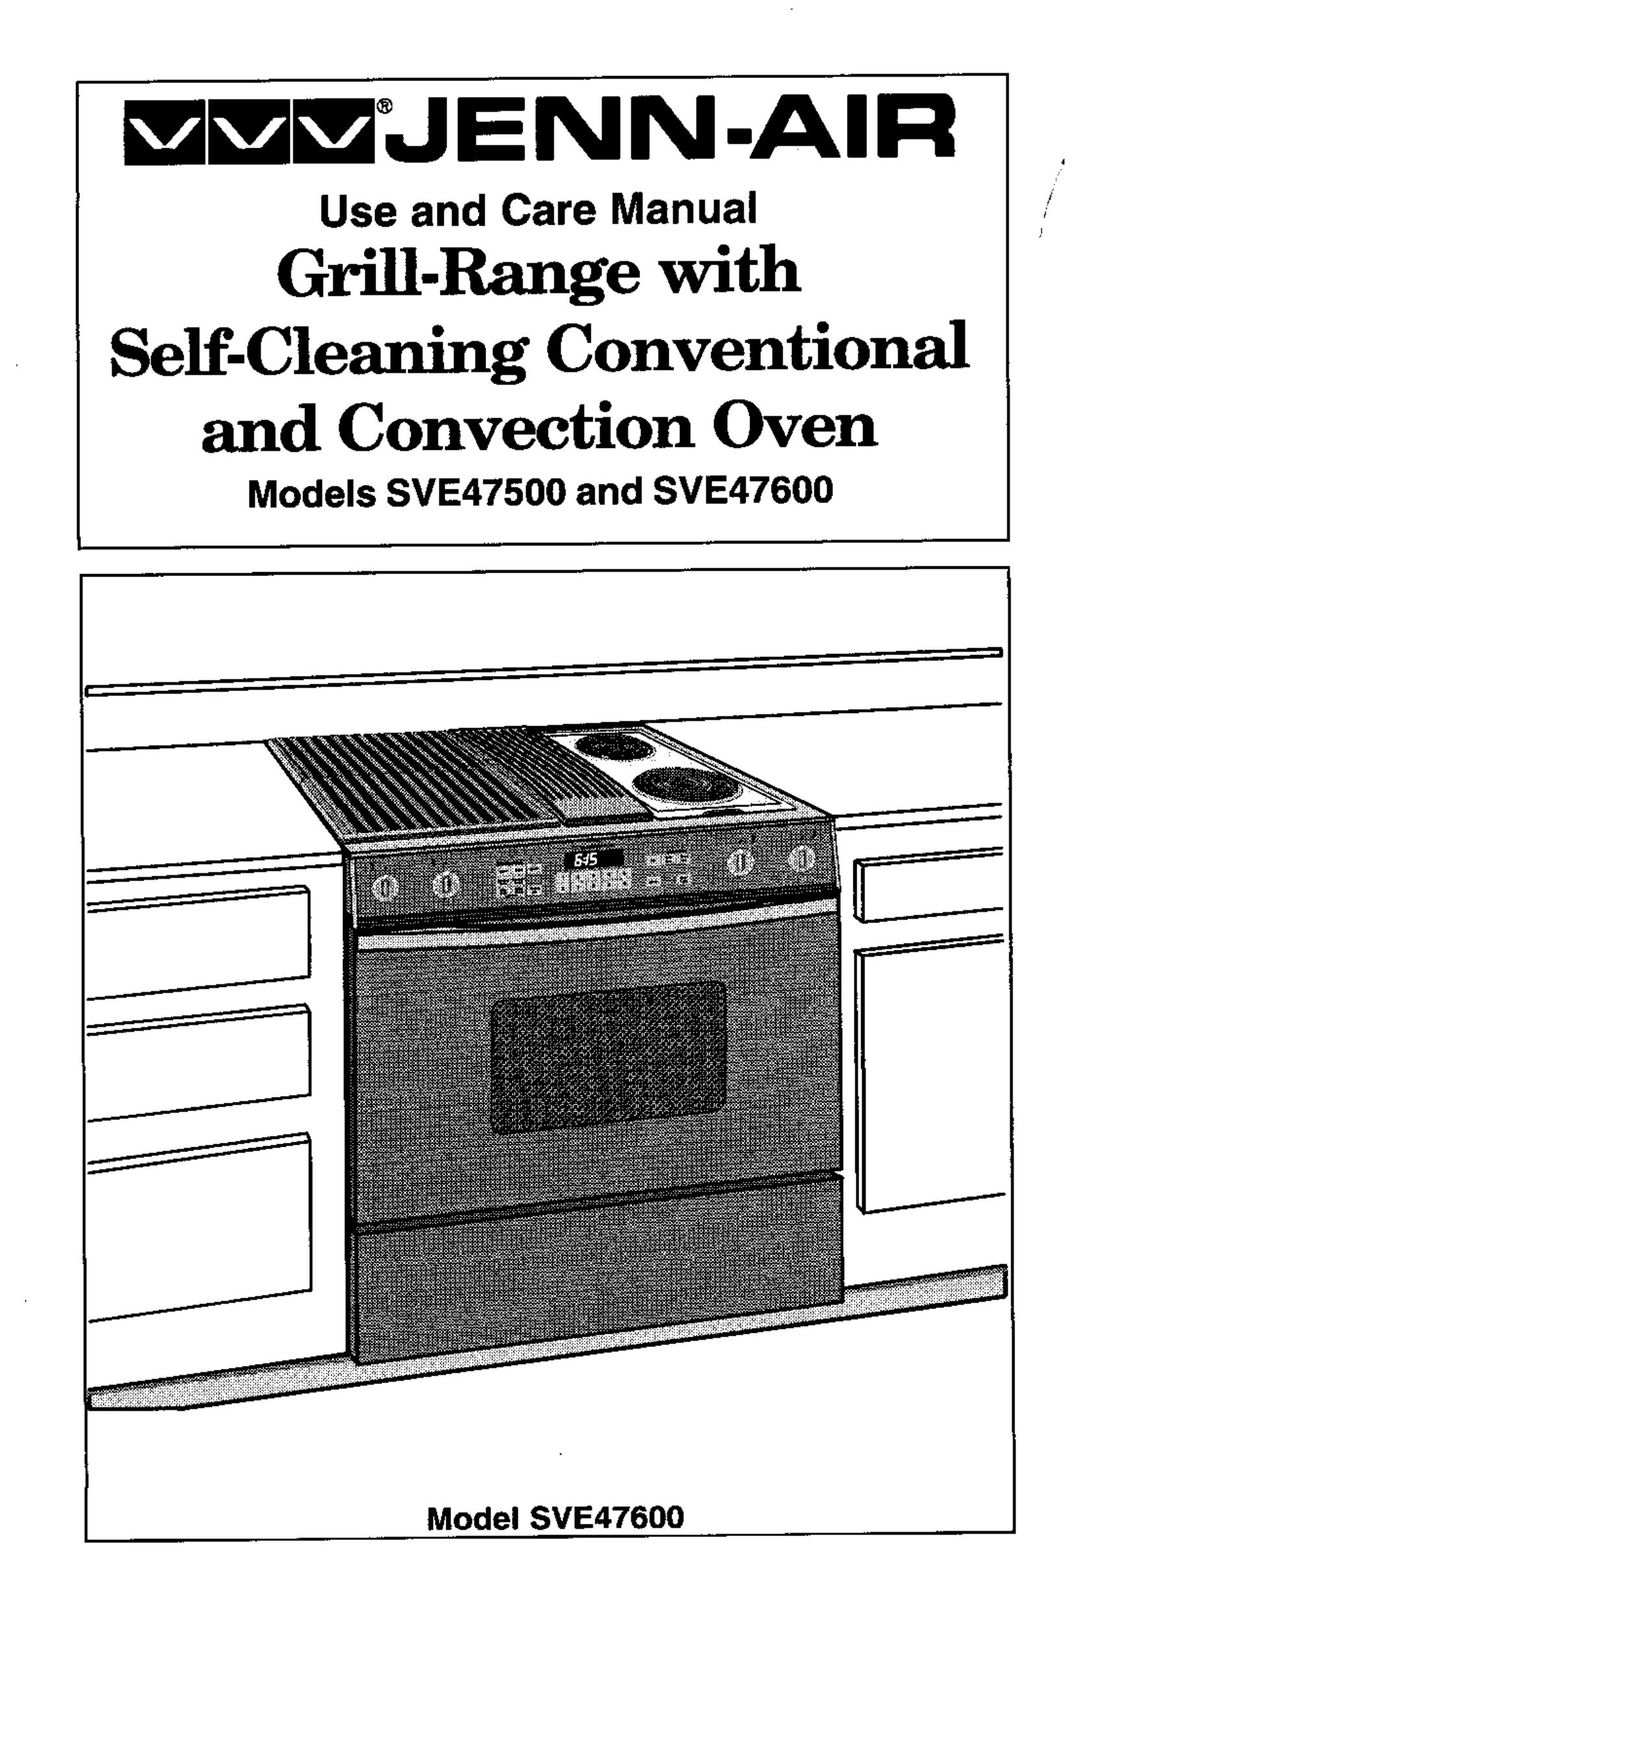 Jenn-Air SVE47600 Convection Oven User Manual